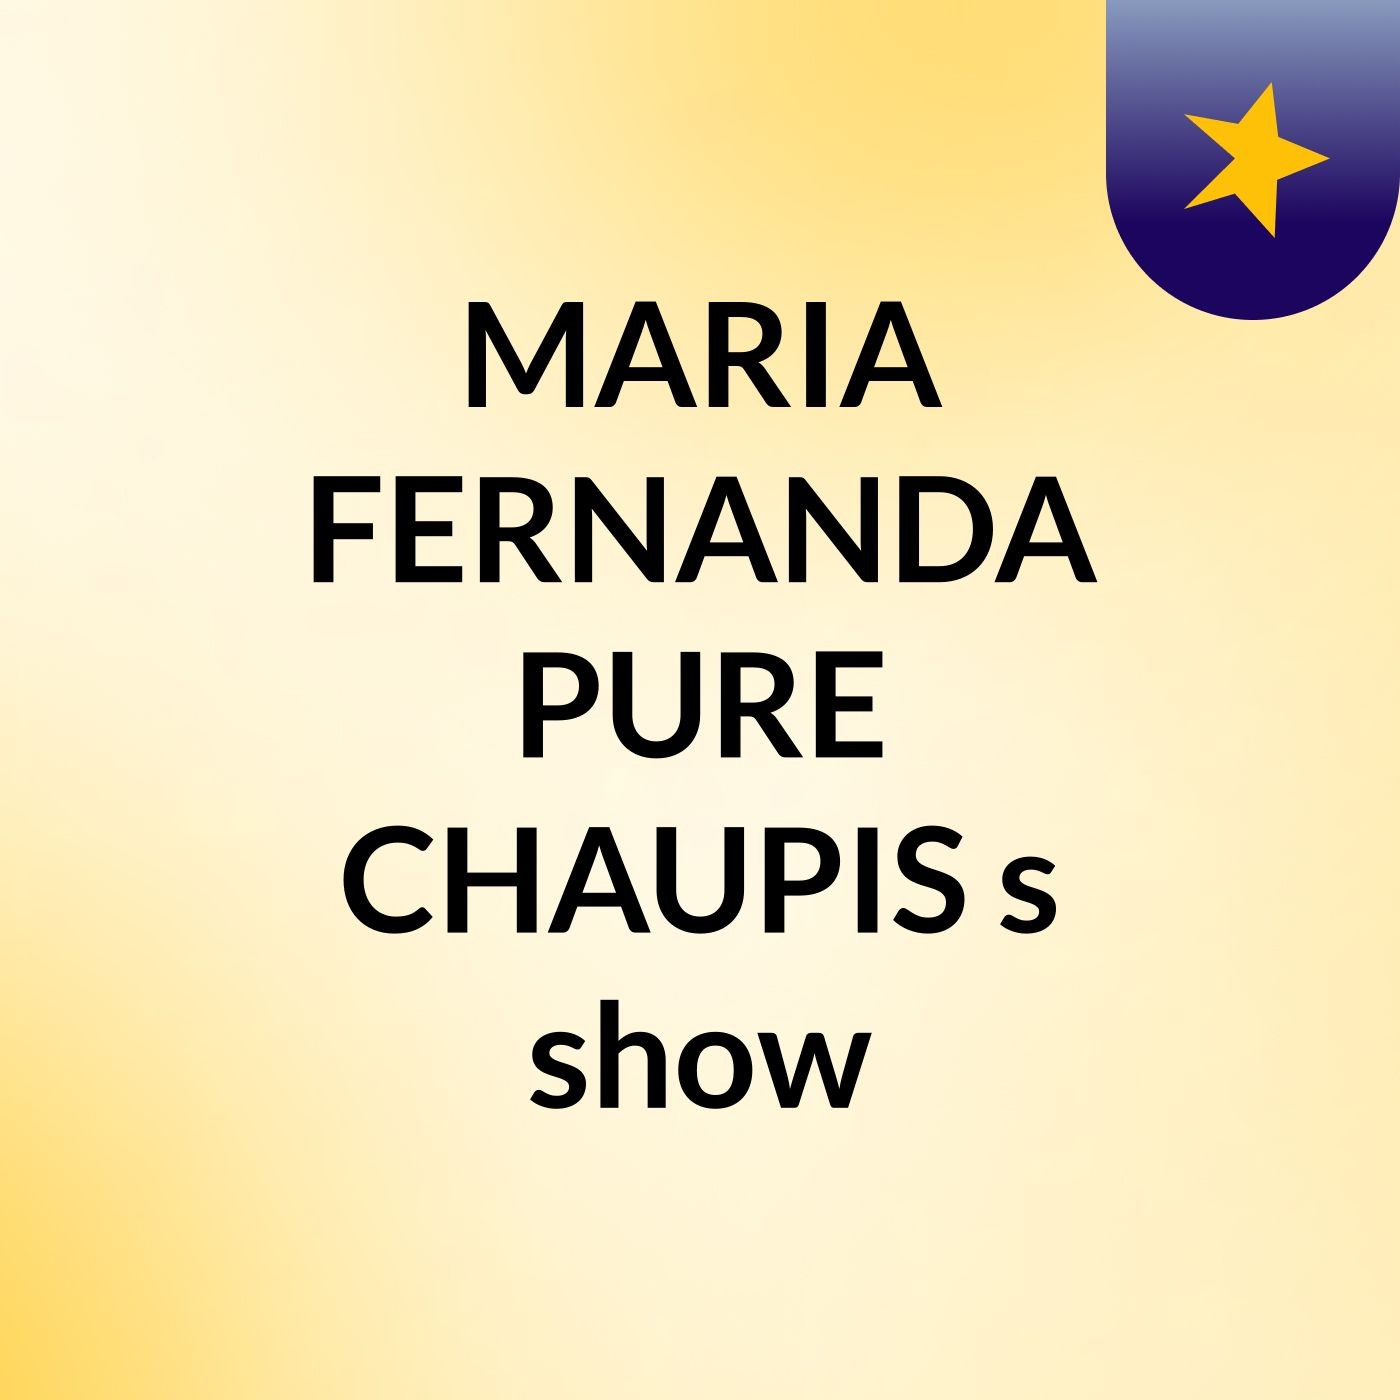 MARIA FERNANDA PURE CHAUPIS's show